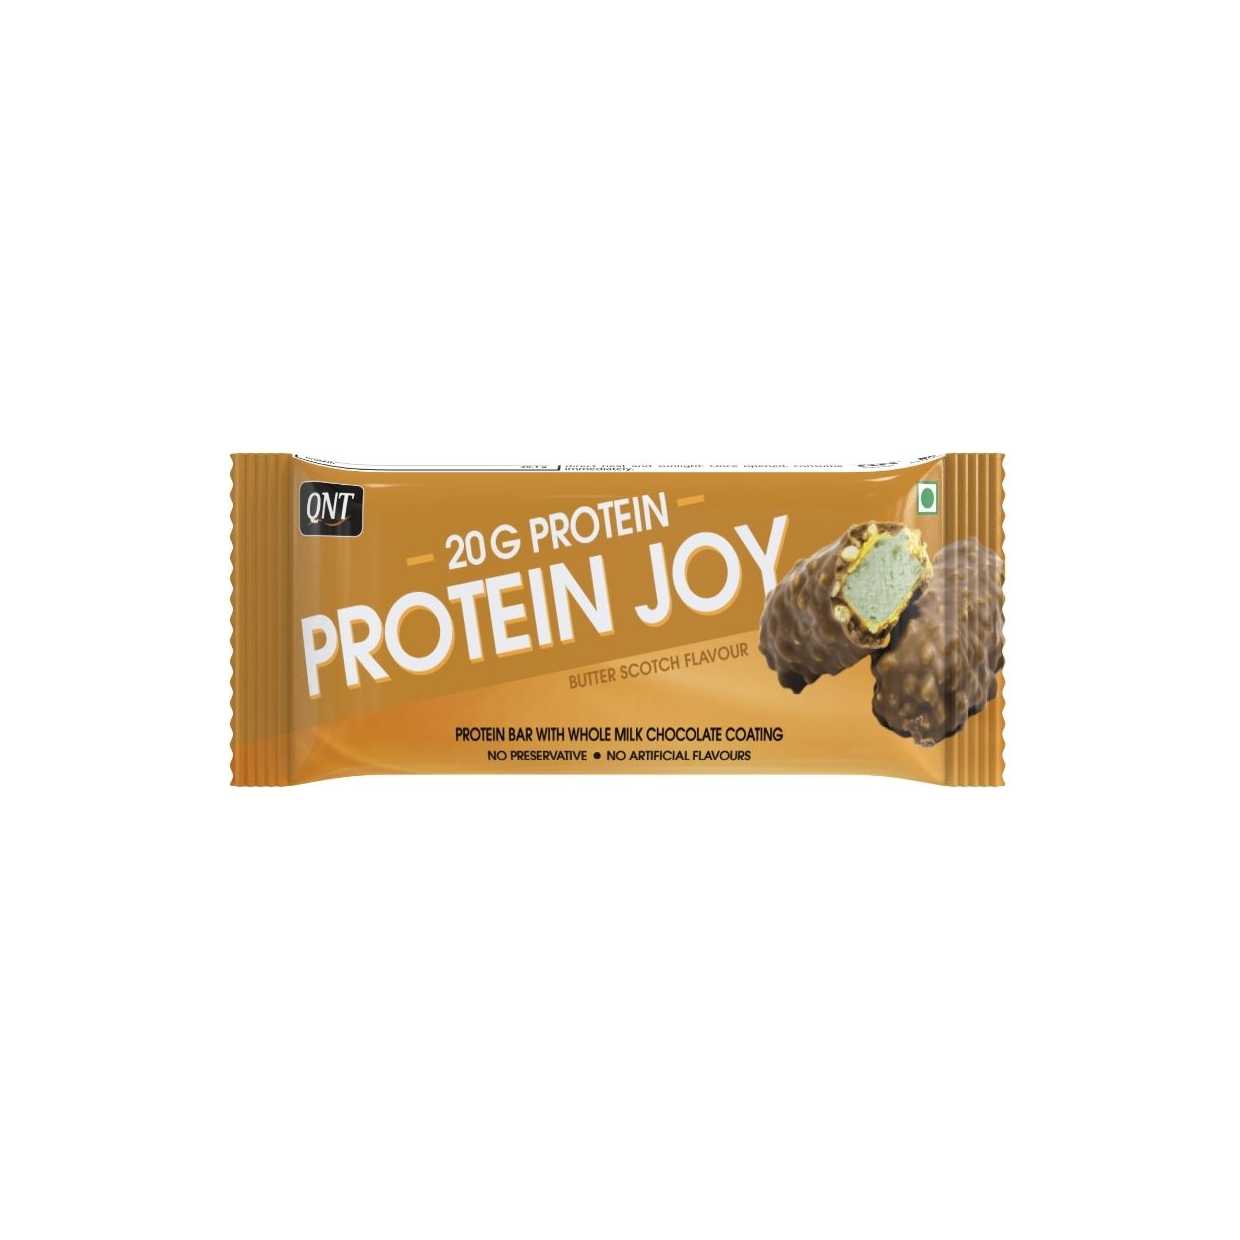 QNT Protein Joy 20g Protein Bar 100% Vegetarian 6 x 70g Bars (420g Pack)